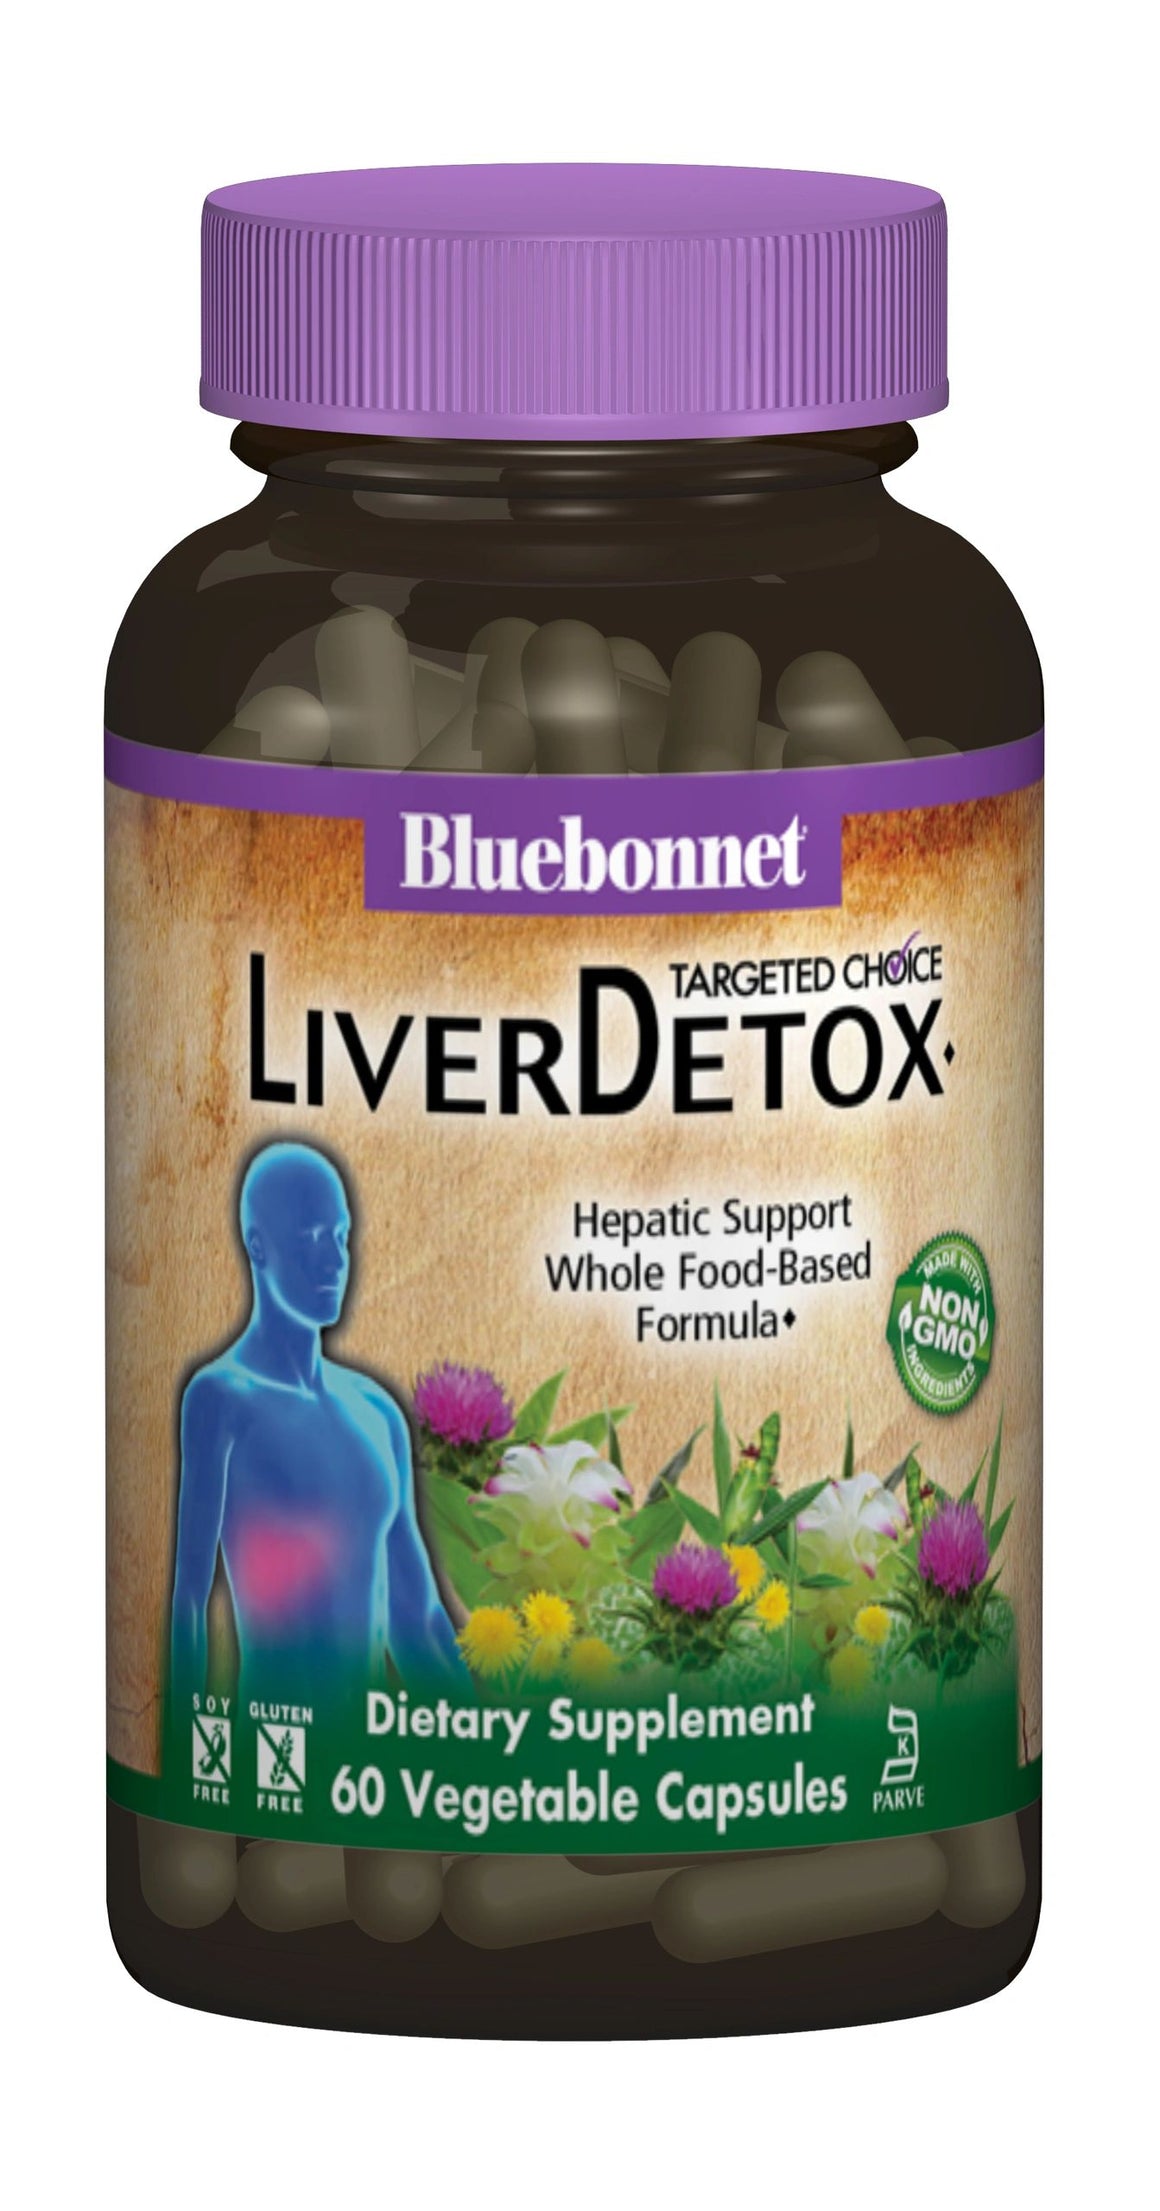 A bottle of Bluebonnet Targeted Choice® Liver Detox